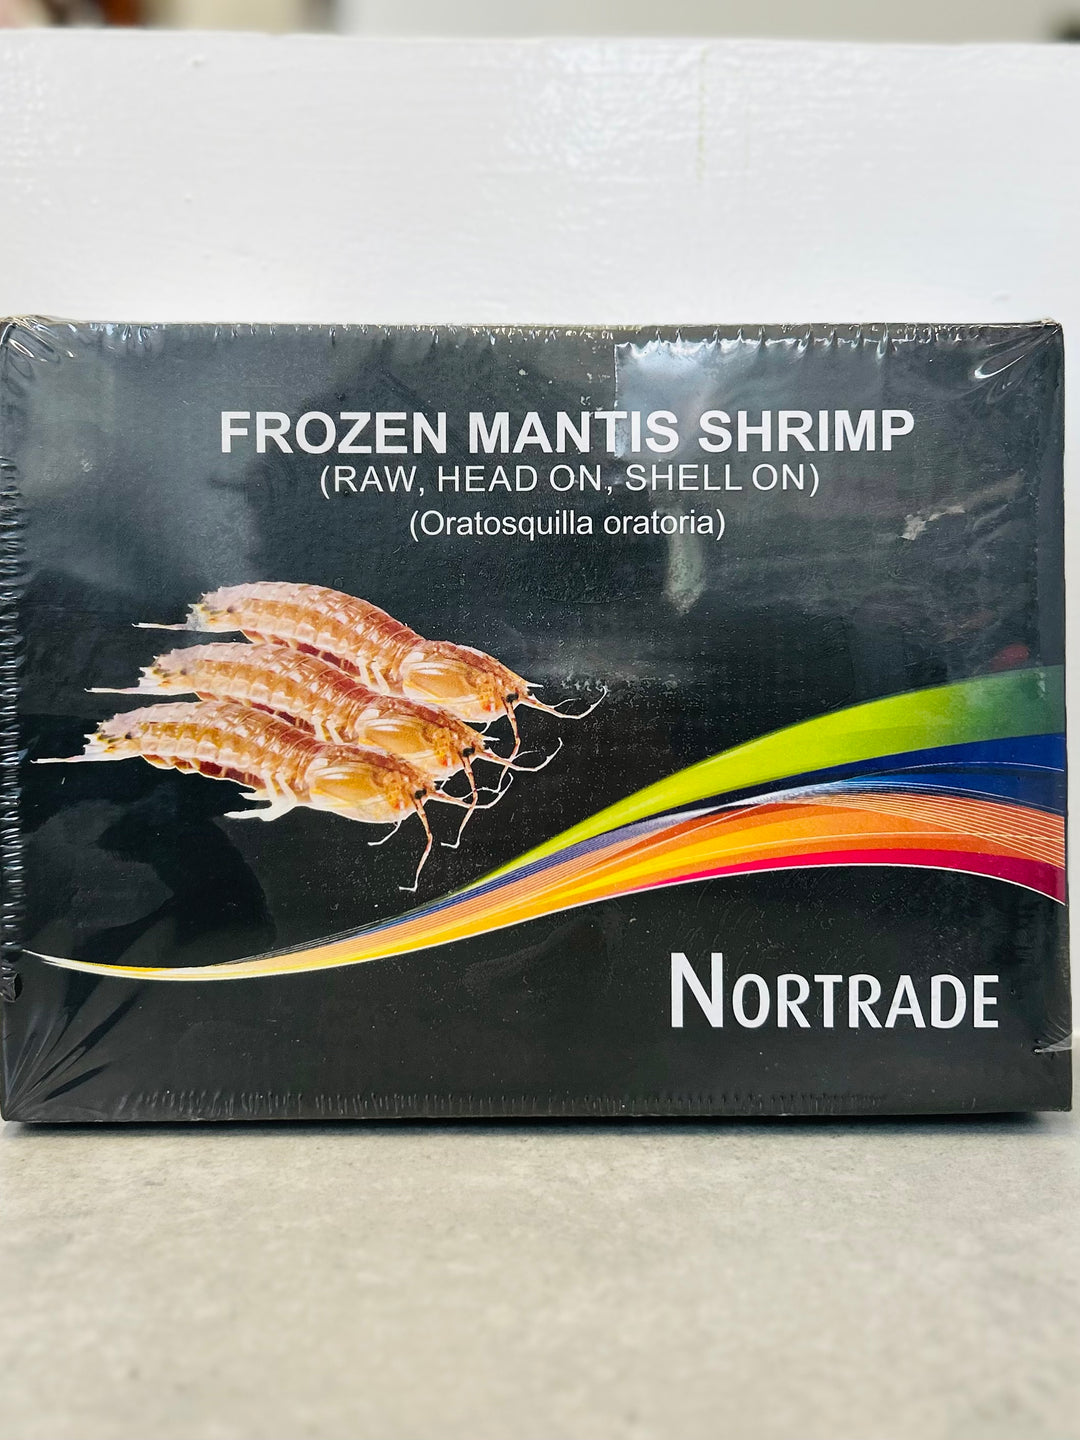 Nortrade 冻皮皮虾 1kg Frozen Maint Shrimp